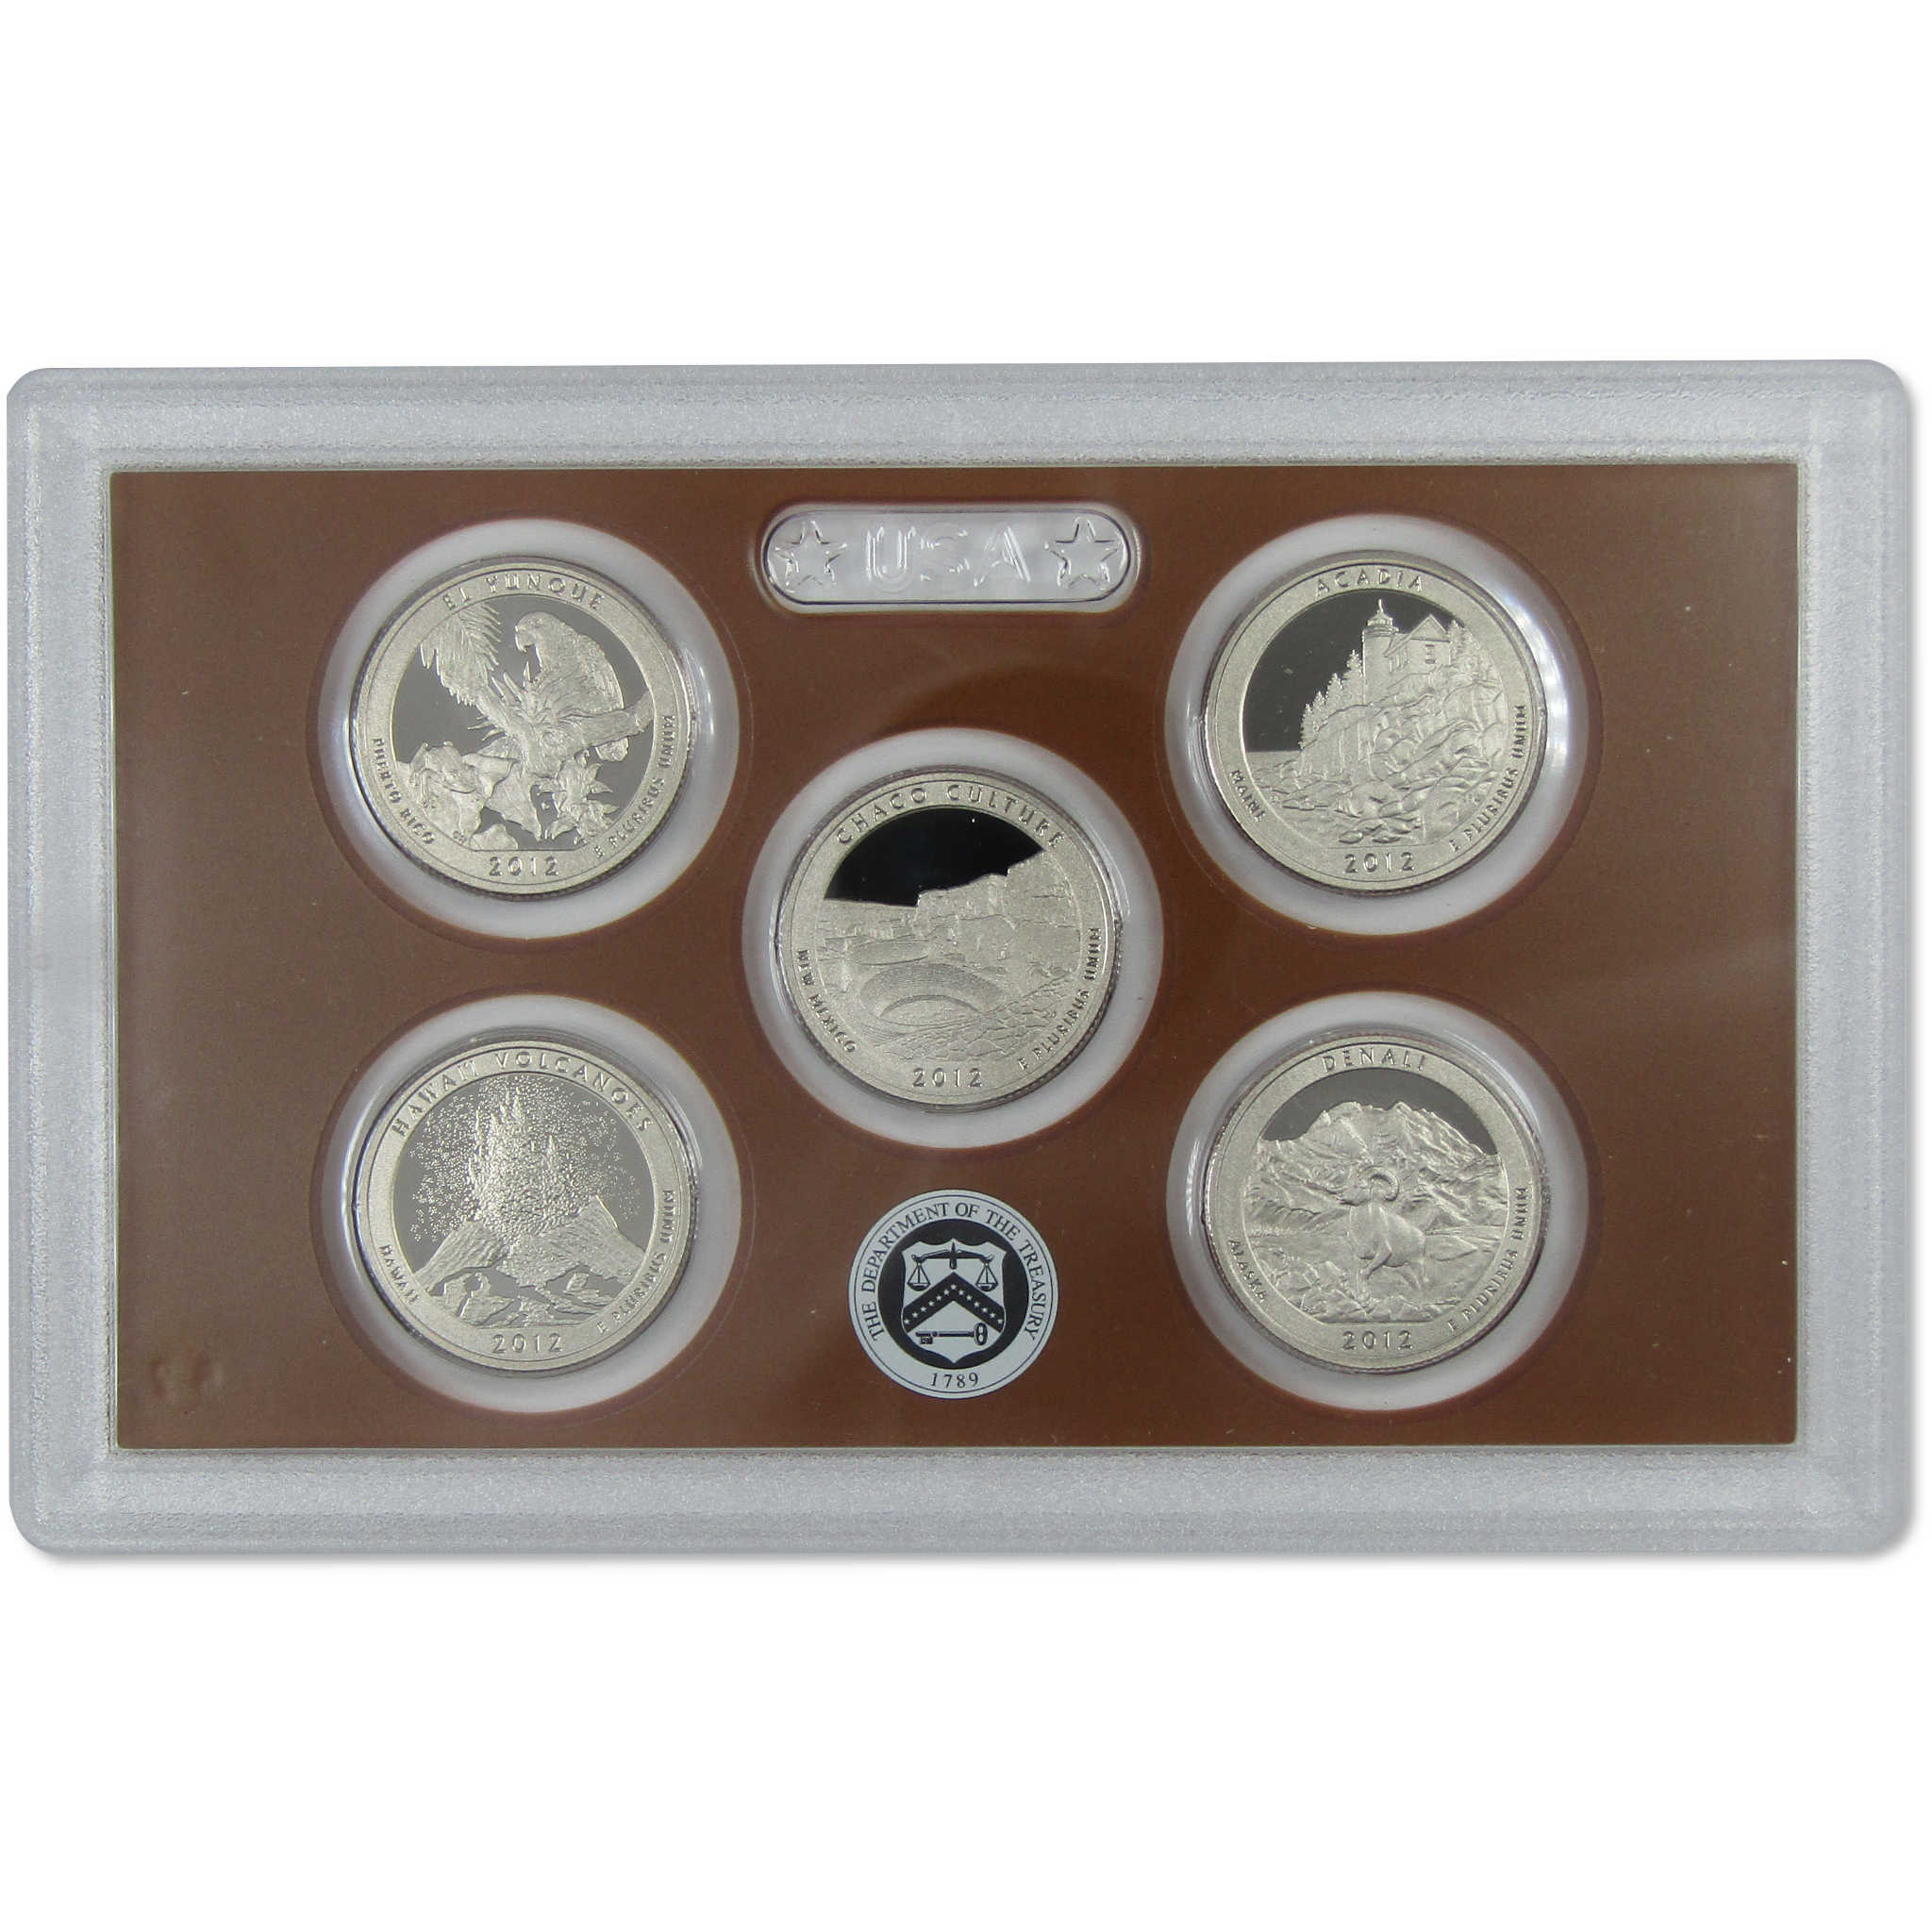 2012 America the Beautiful Quarter Clad Proof Set U.S. Mint OGP COA